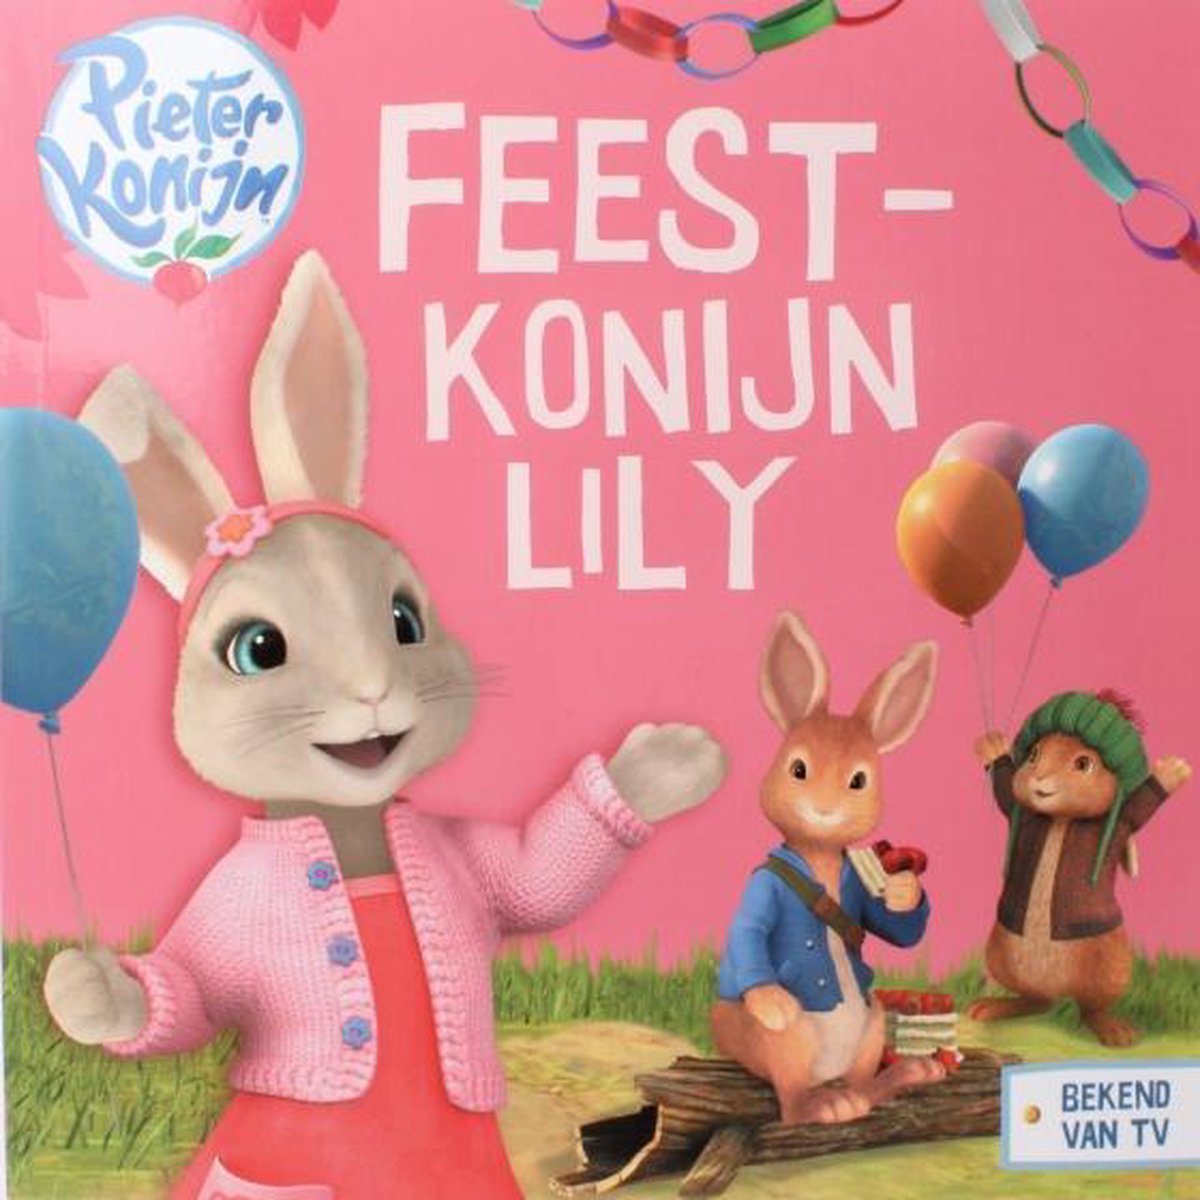 Mijnenveld Vreemdeling Verloren Pieter Konijn - Feestkonijn Lily (Peter Rabbit) - Boek, Anna Dolinda |  9789463132022 |... | bol.com